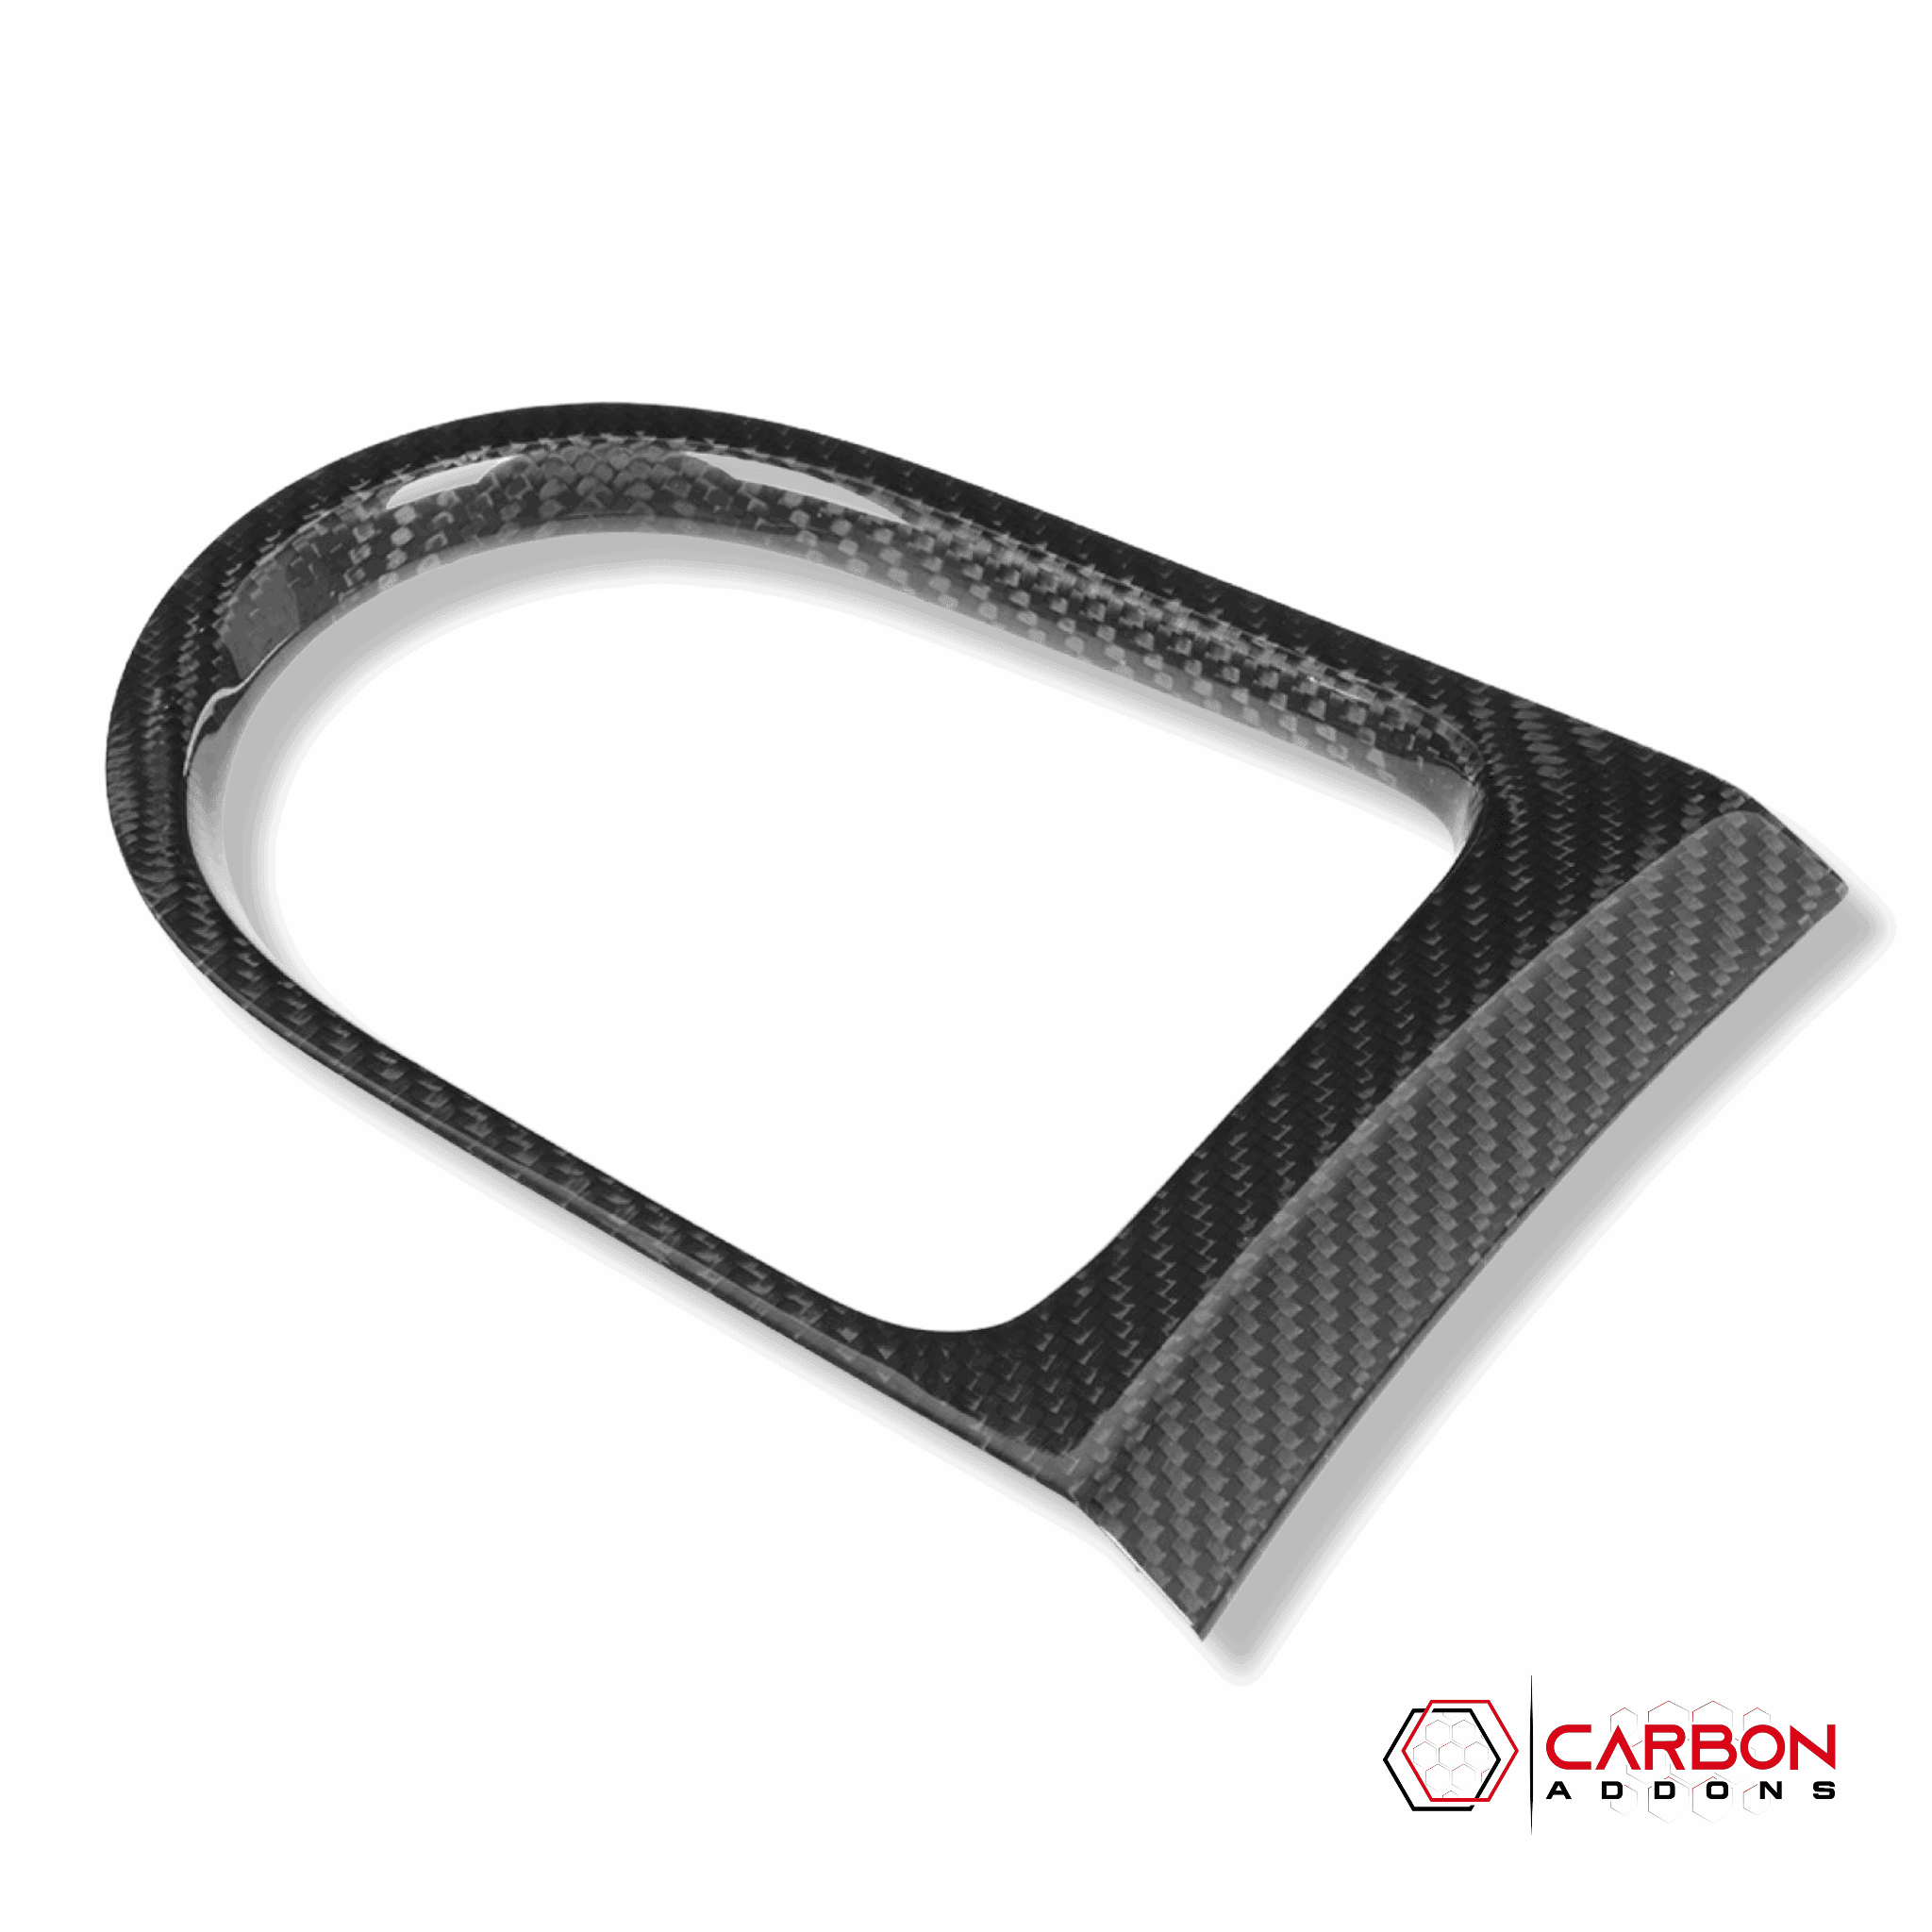 Mustang 2015-2023 Carbon Fiber Gear Shift Bezel Chrome Trim Cover - carbonaddons Carbon Fiber Parts, Accessories, Upgrades, Mods